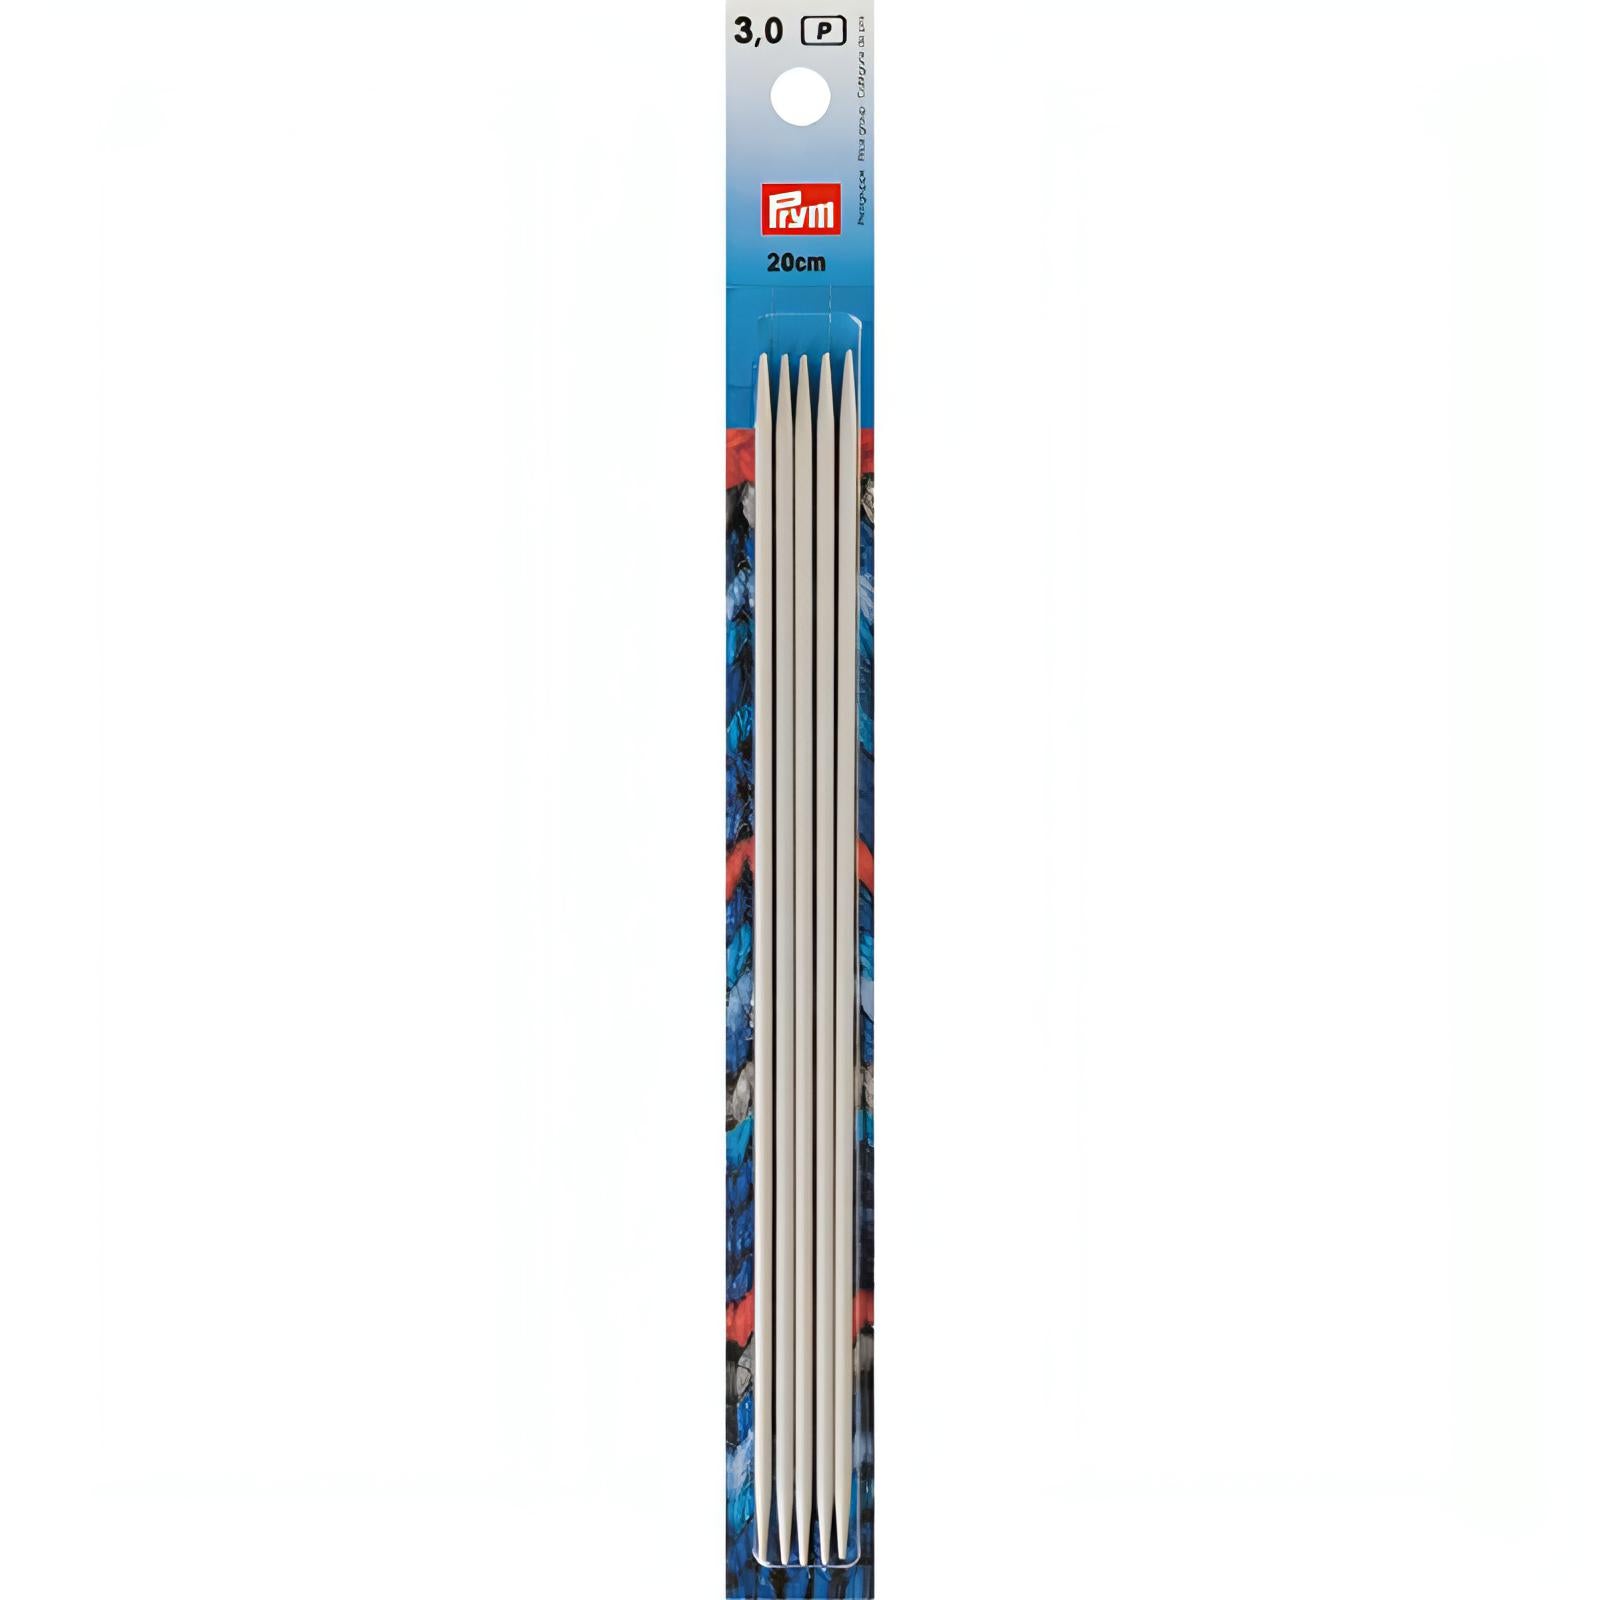 Prym Aluminium Double Pointed & Glove Knitting Pins - 5 x Pearl Grey 20cm (3mm)